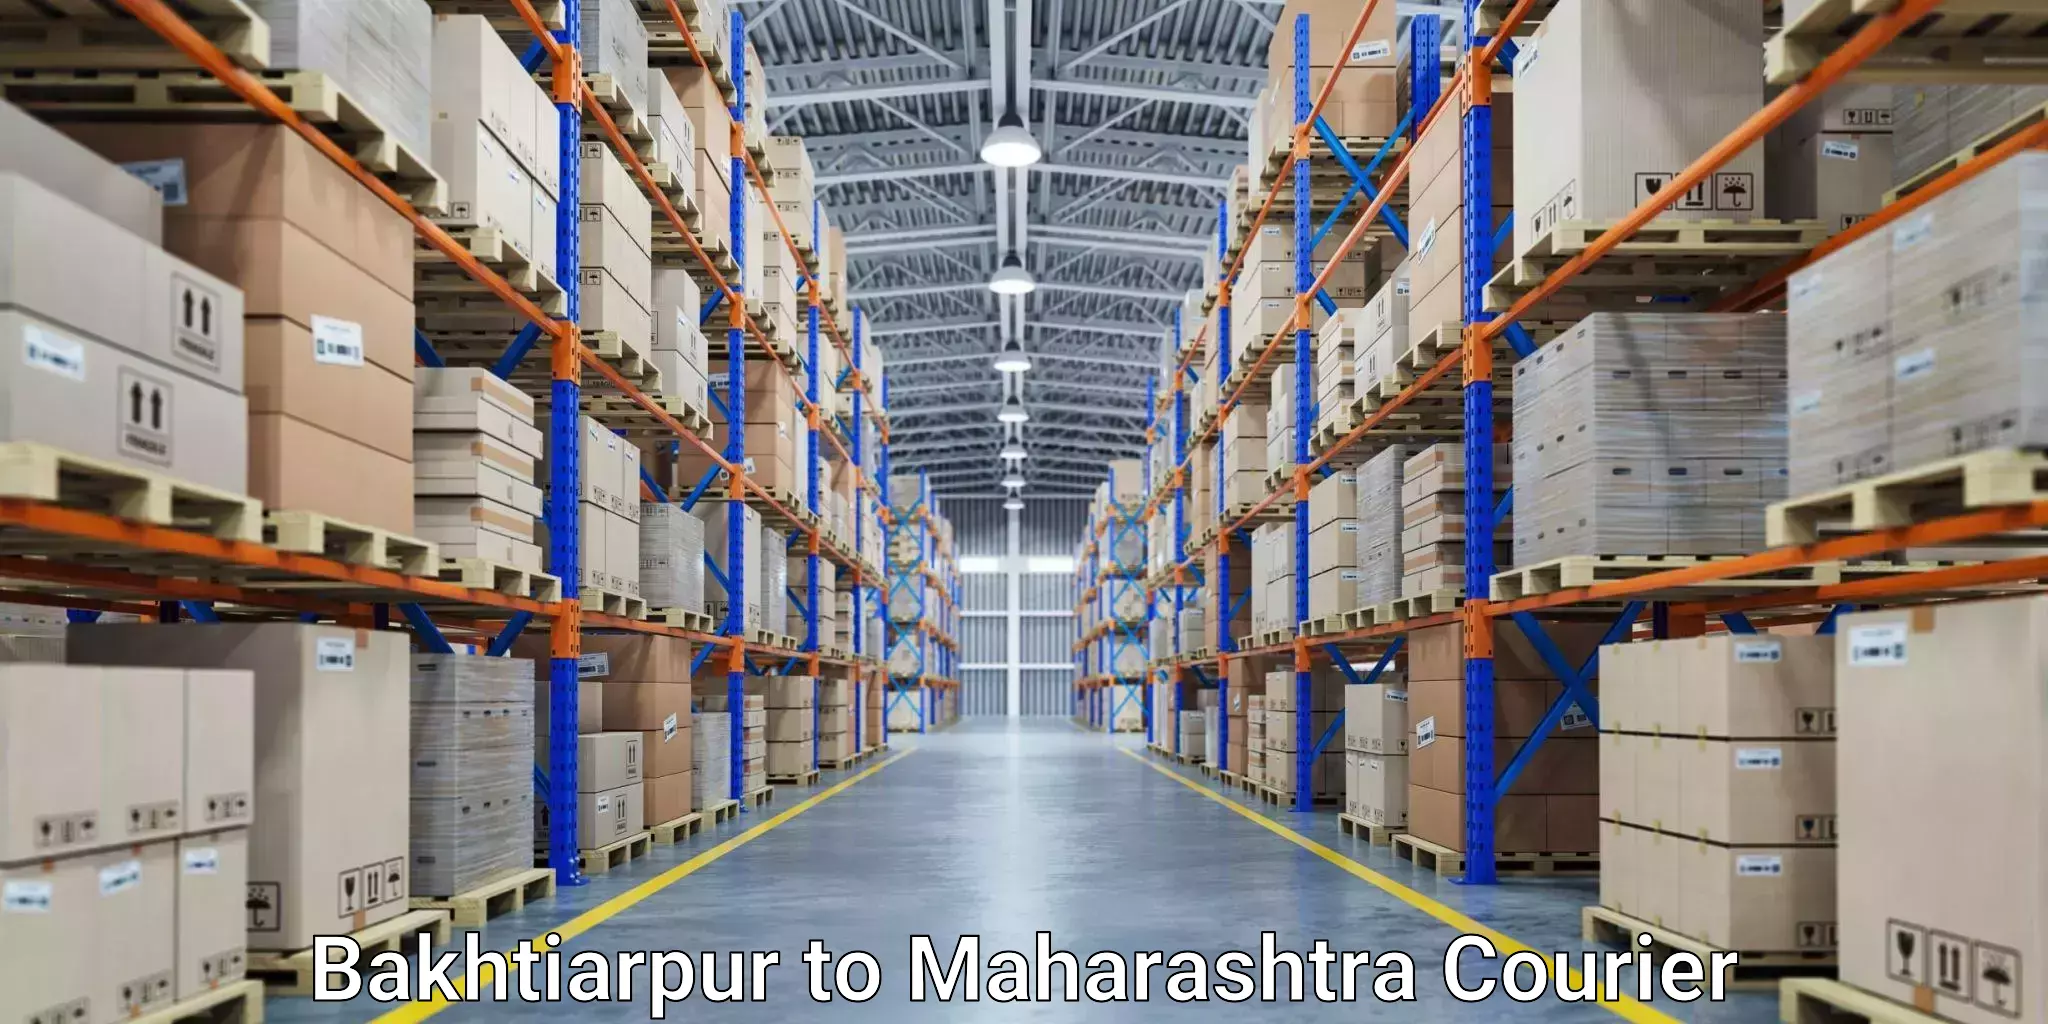 Flexible shipping options Bakhtiarpur to Jawaharlal Nehru Port Nhava Sheva